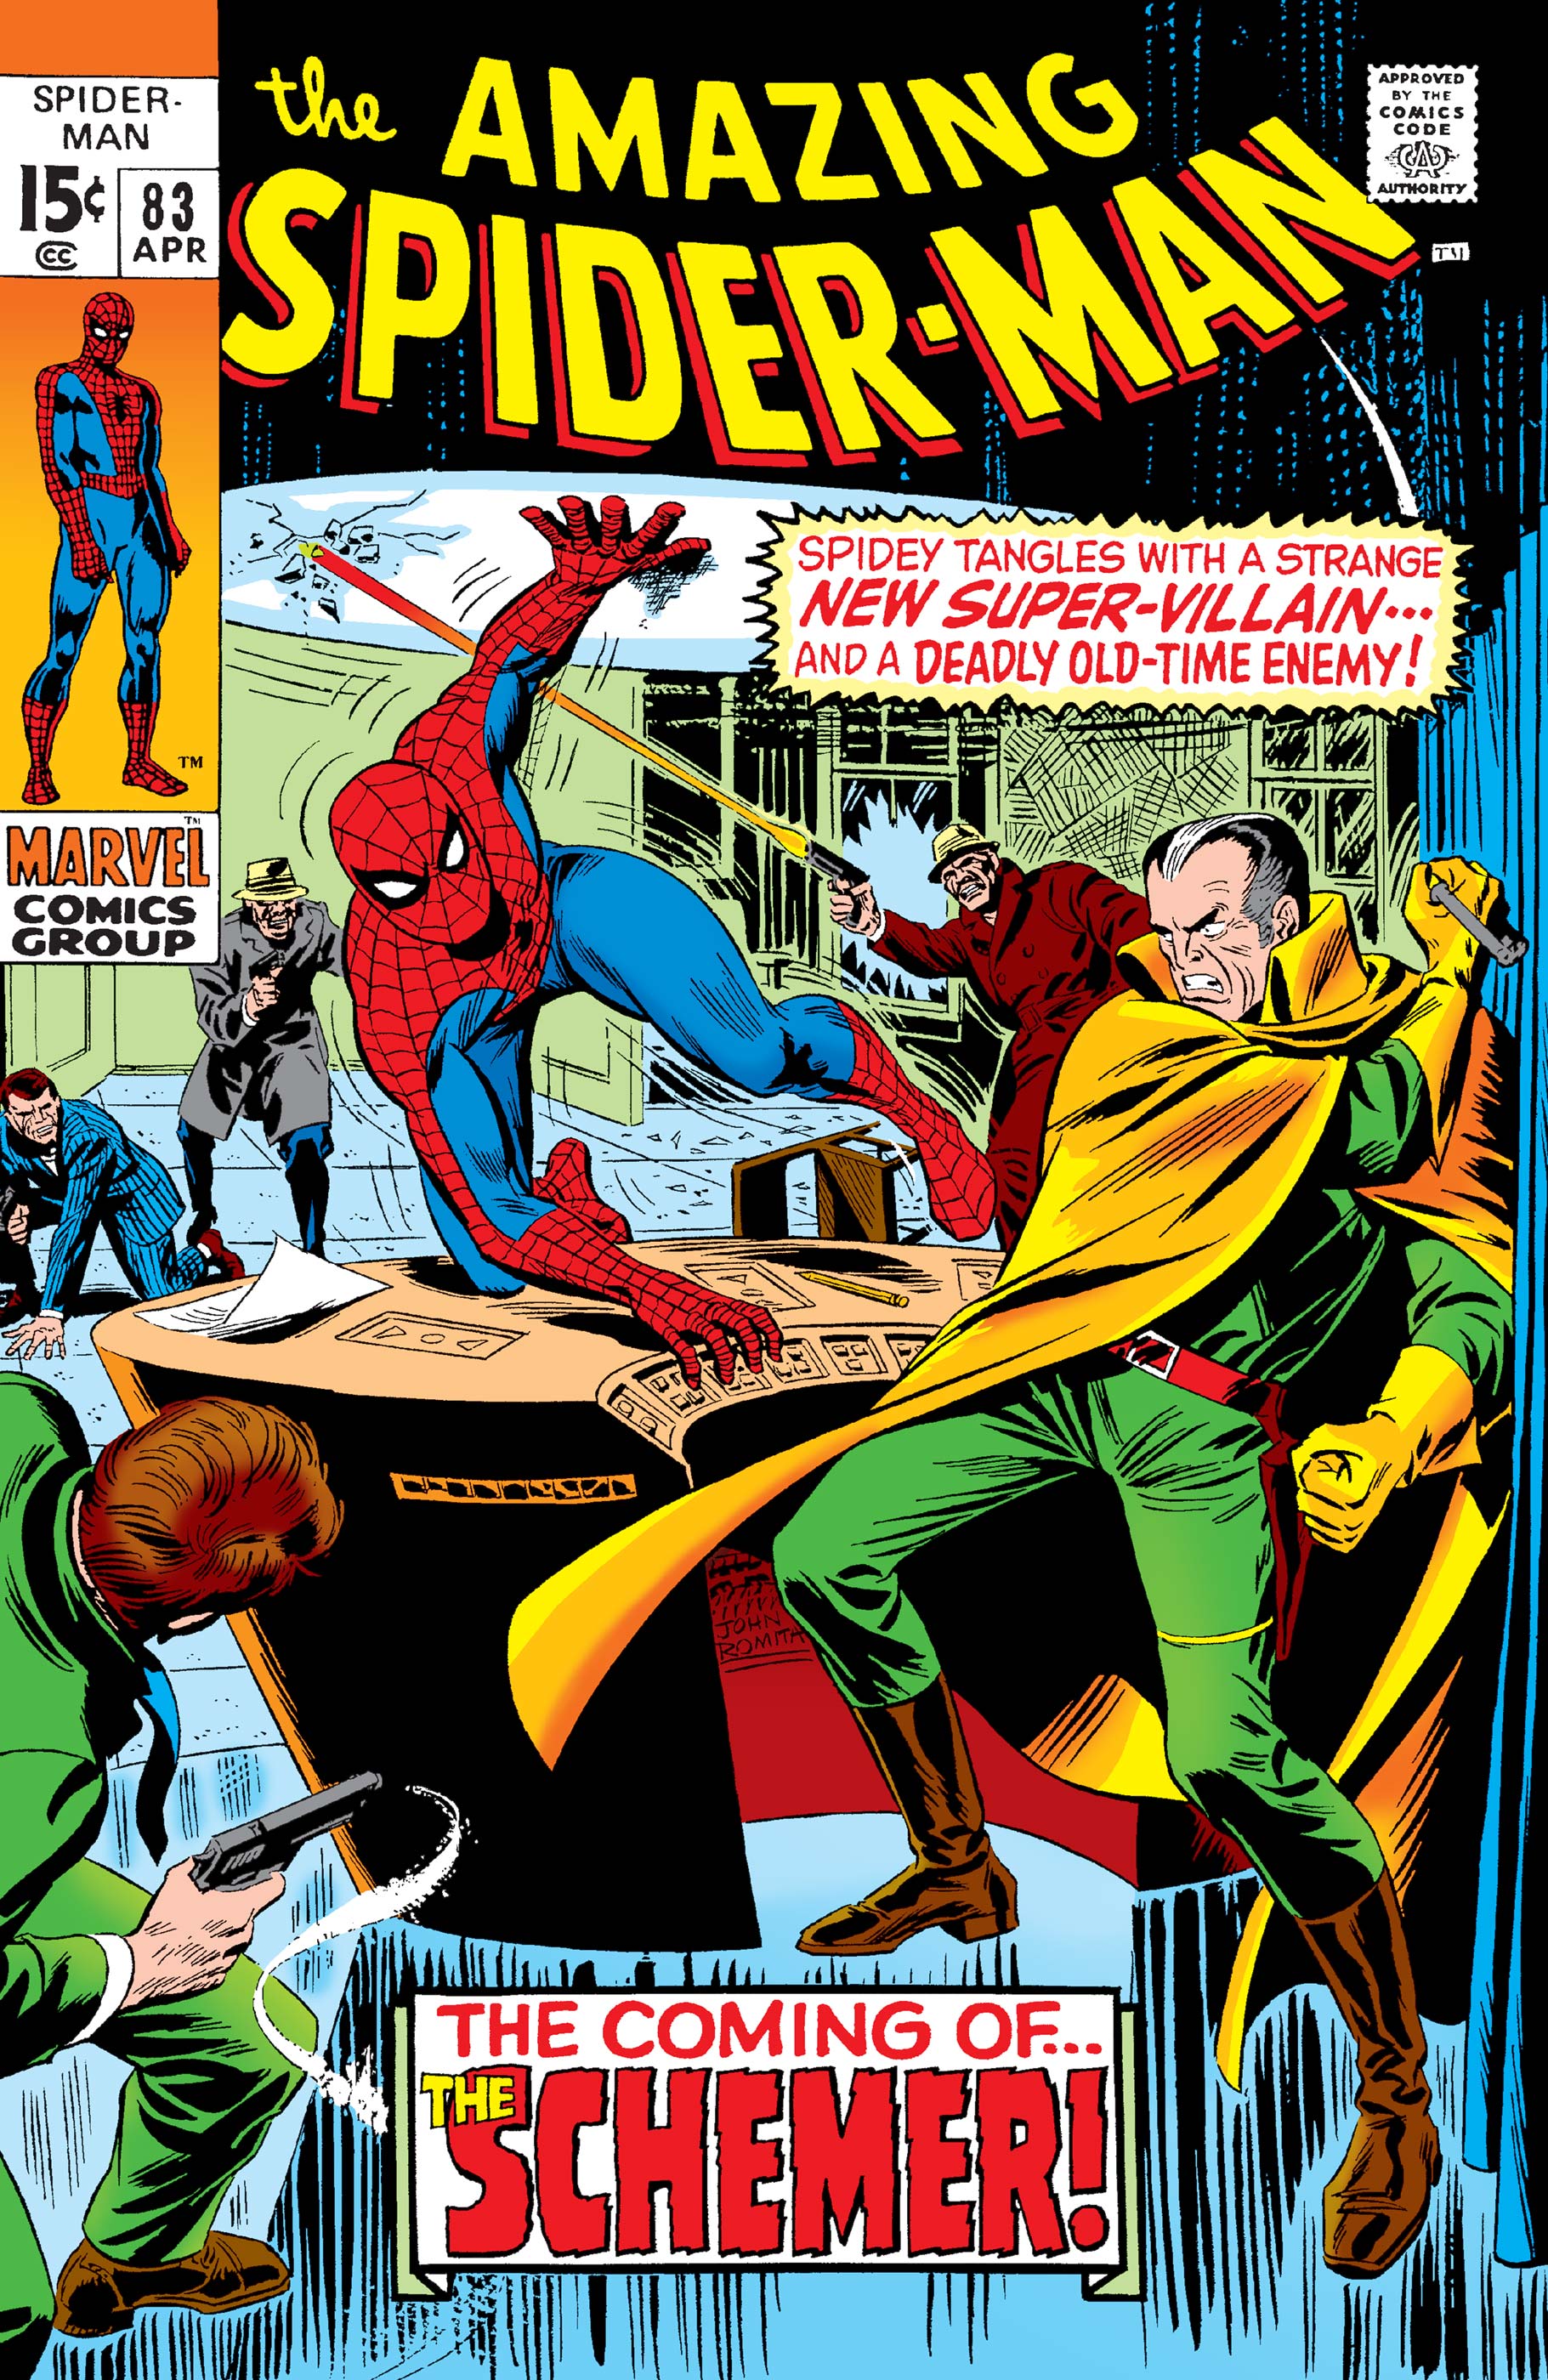 The Amazing Spider-Man (1963) #83